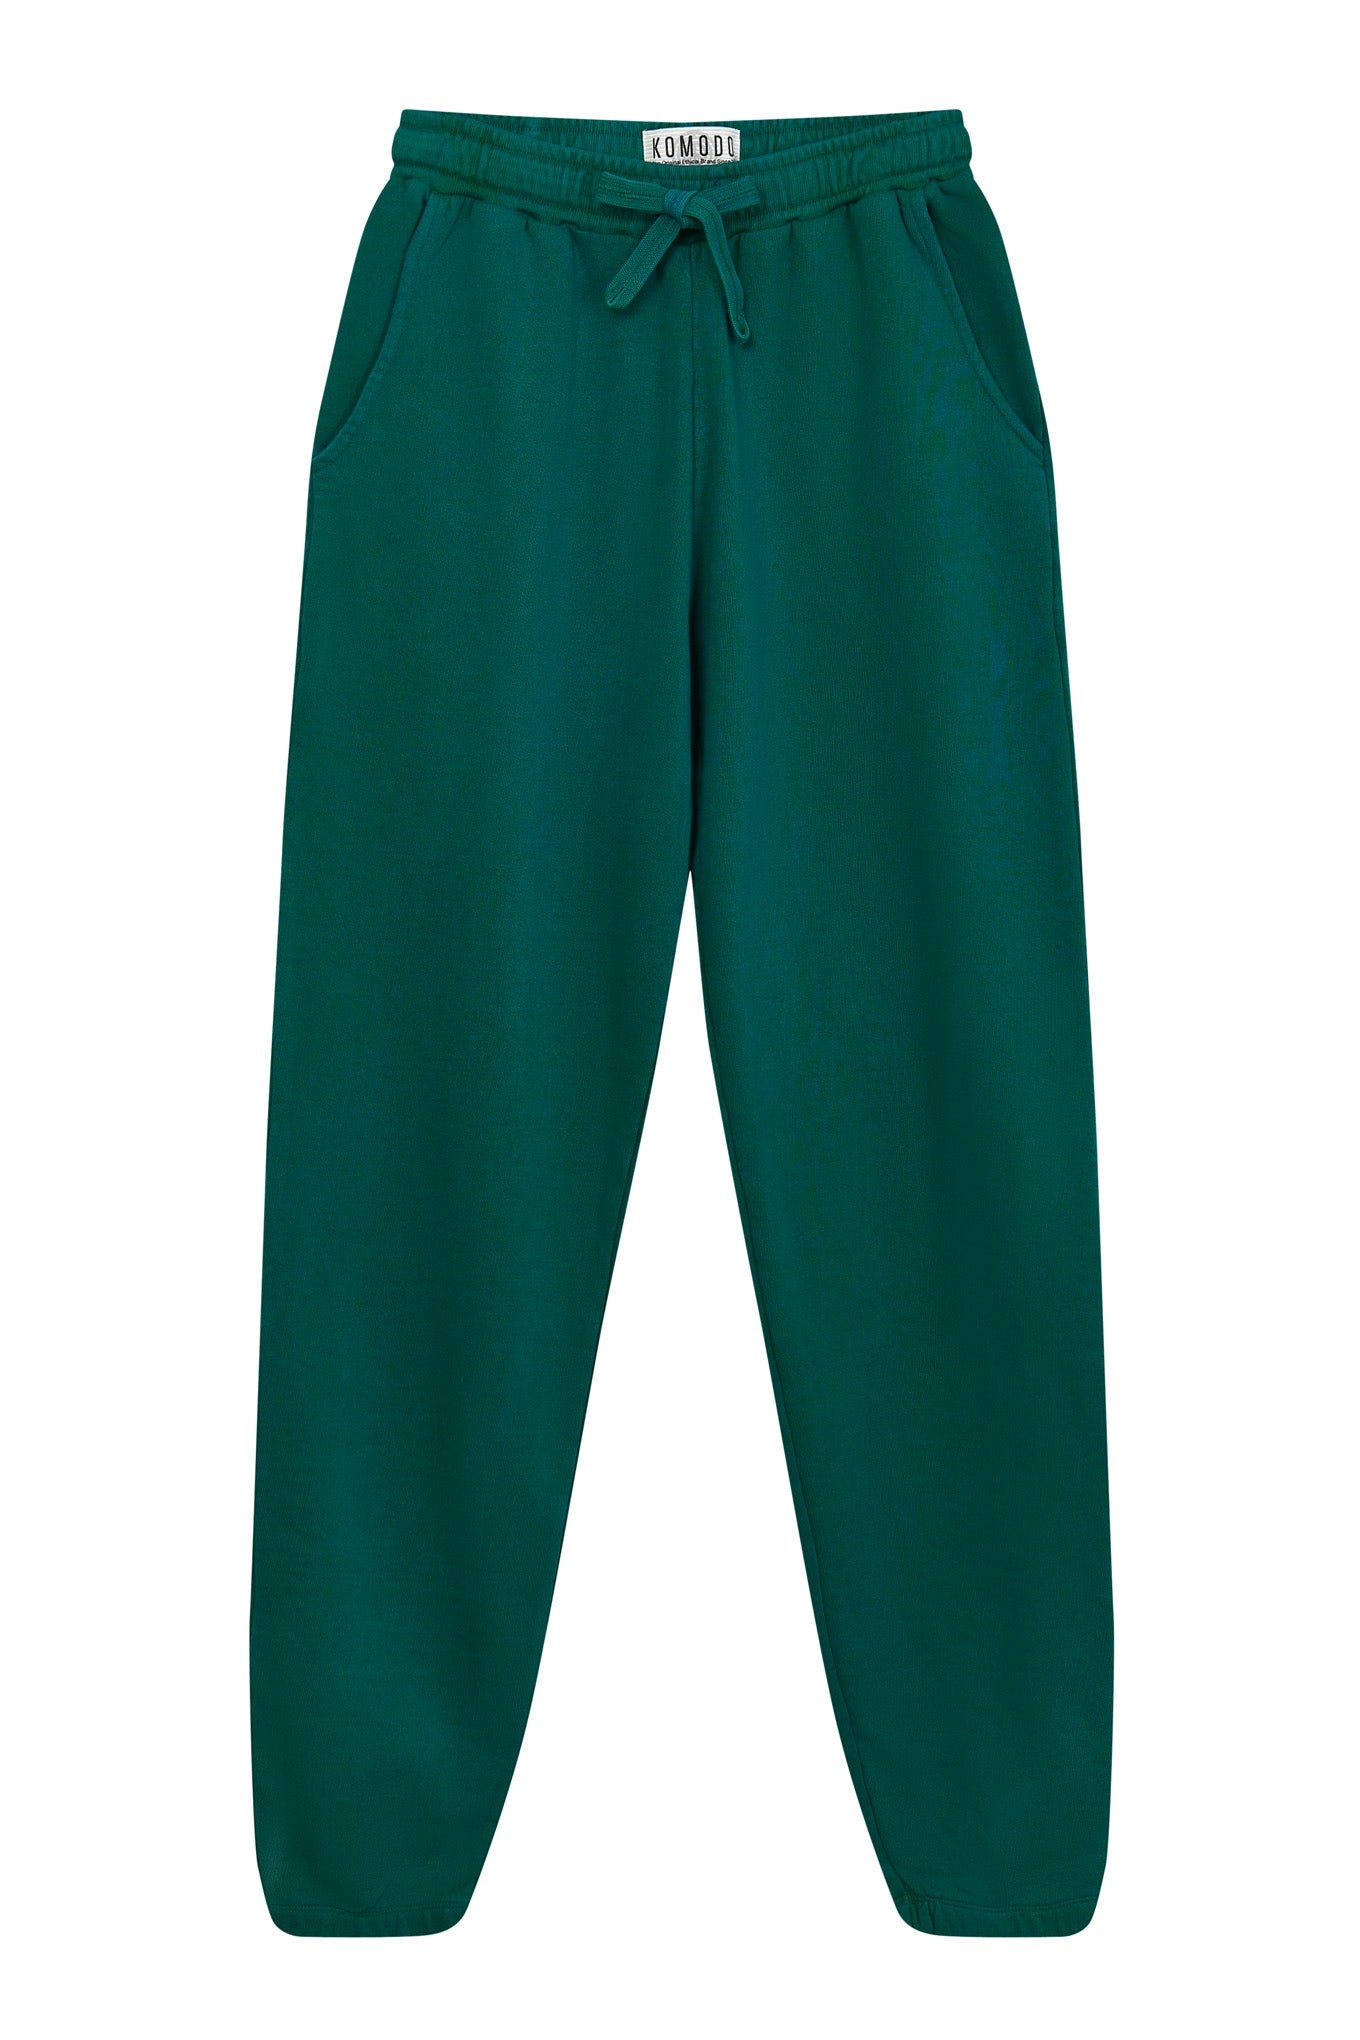 Dark green ADAM jogging pants made of organic cotton from Komodo